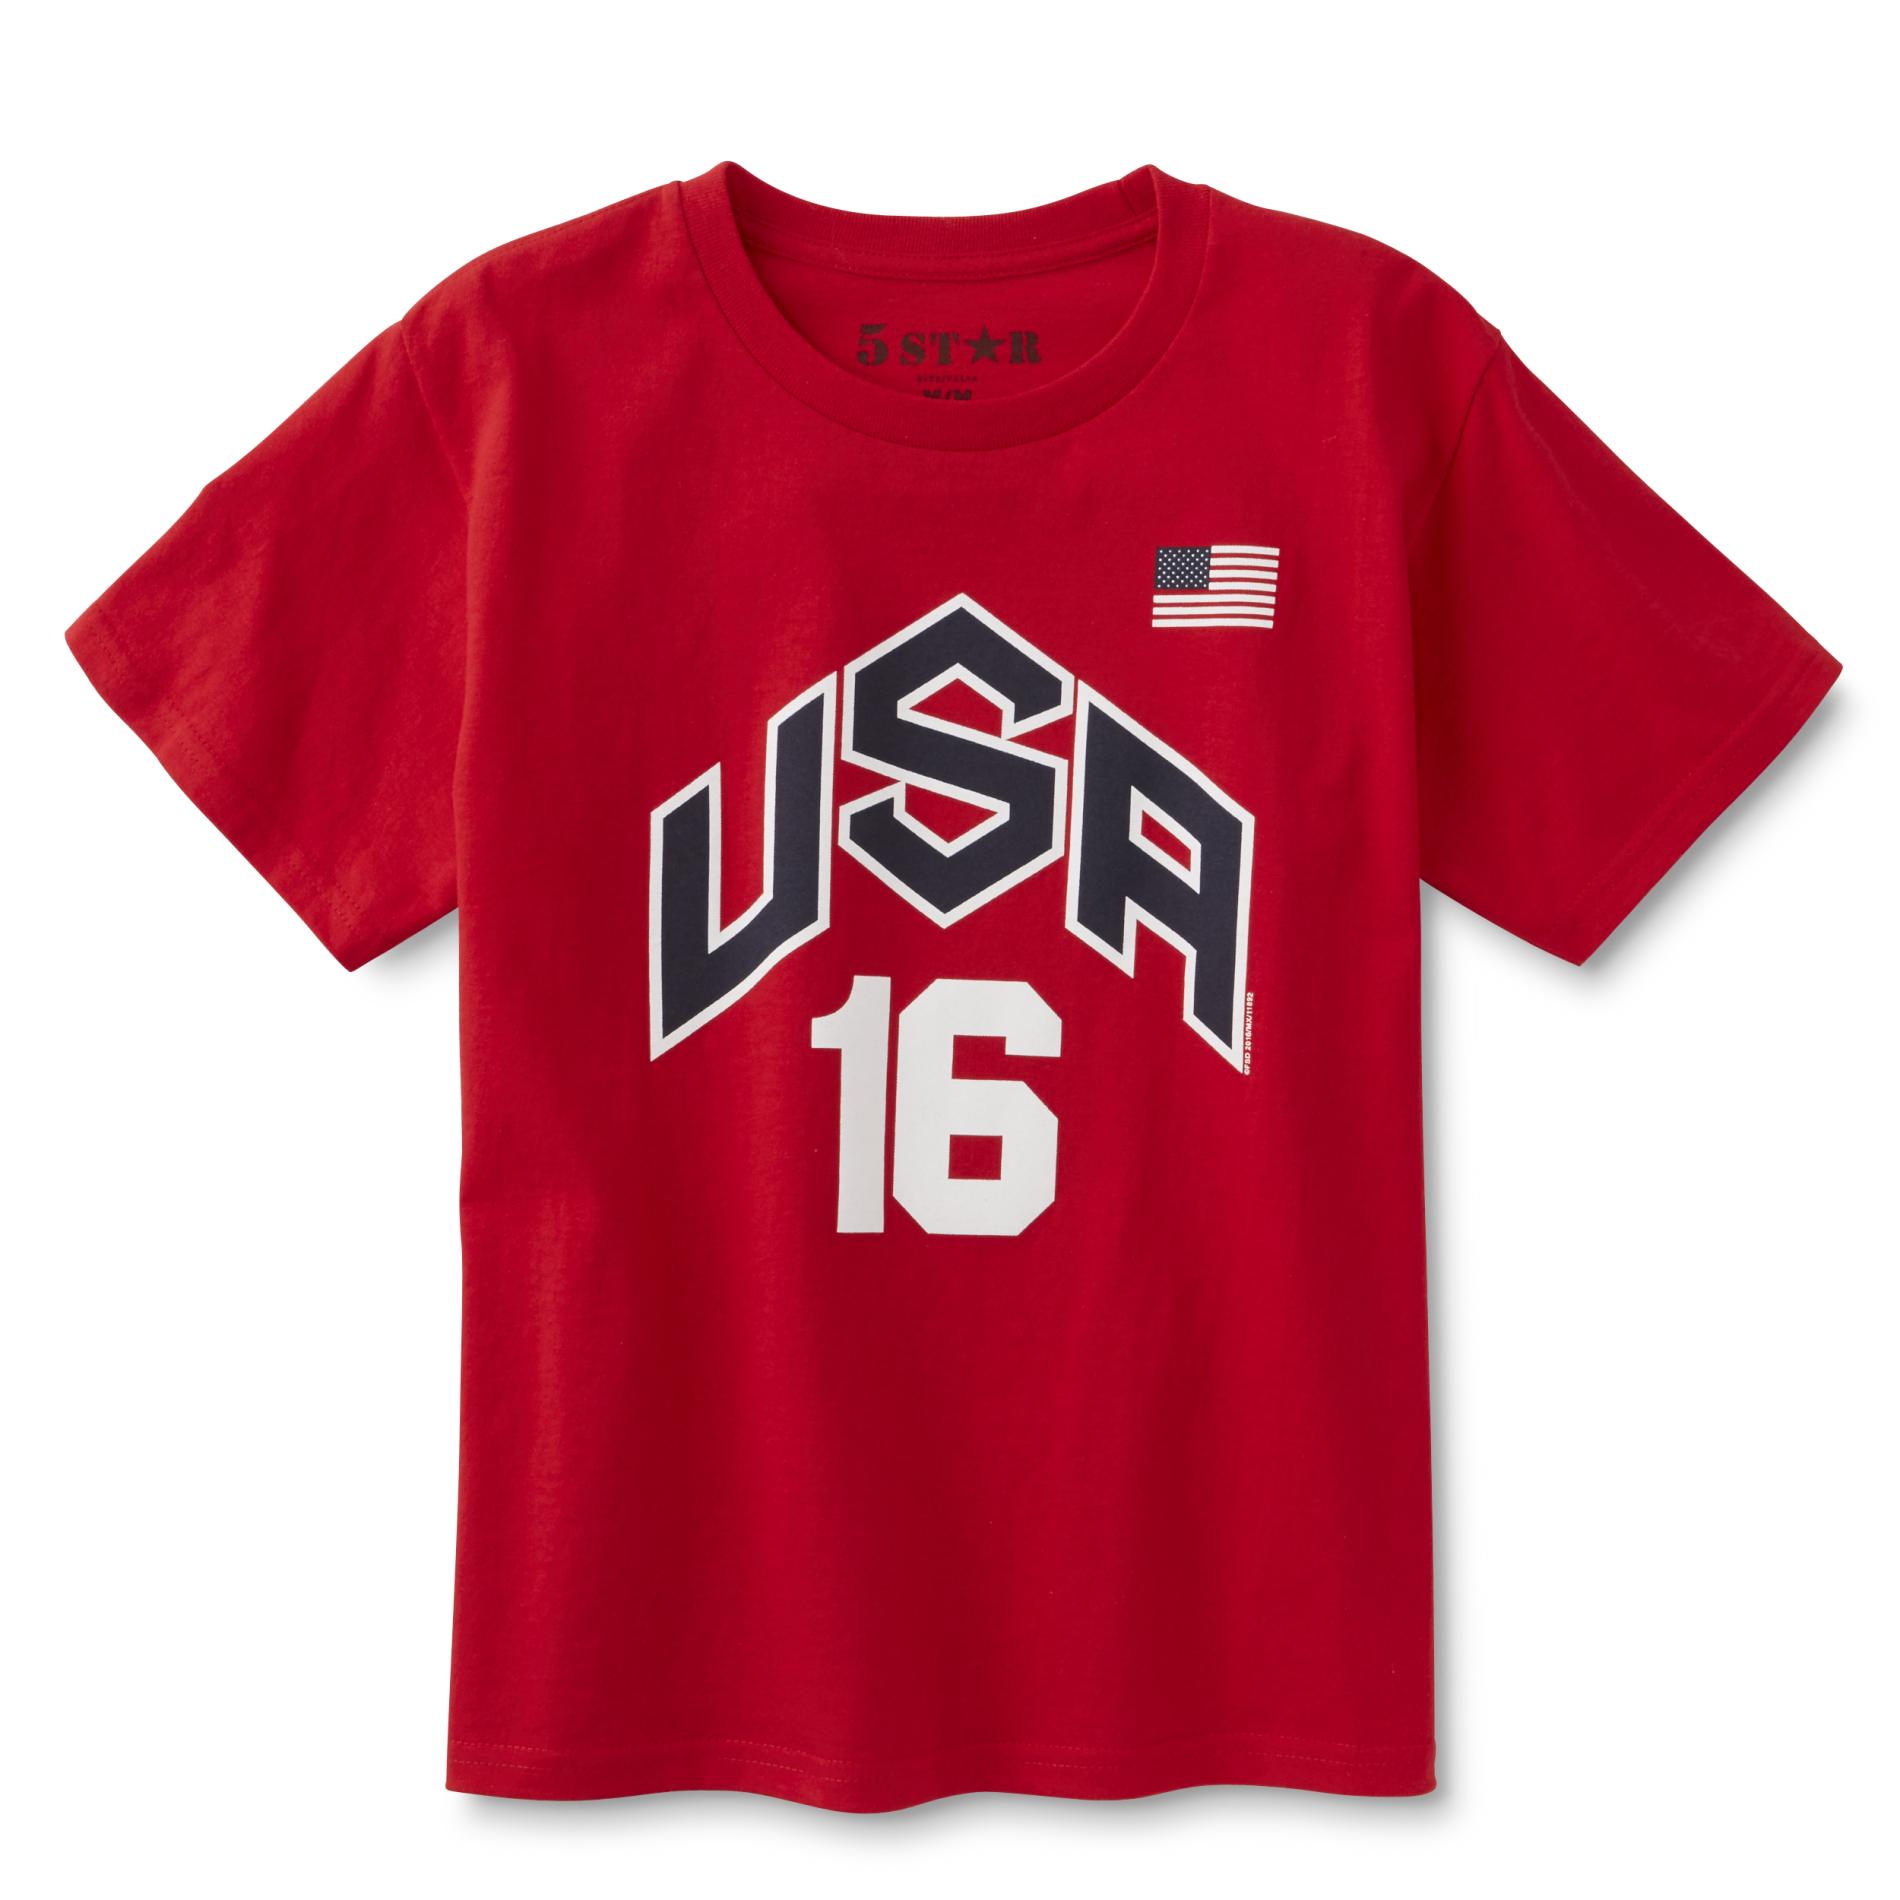 5Star Boy's Graphic T-Shirt - USA